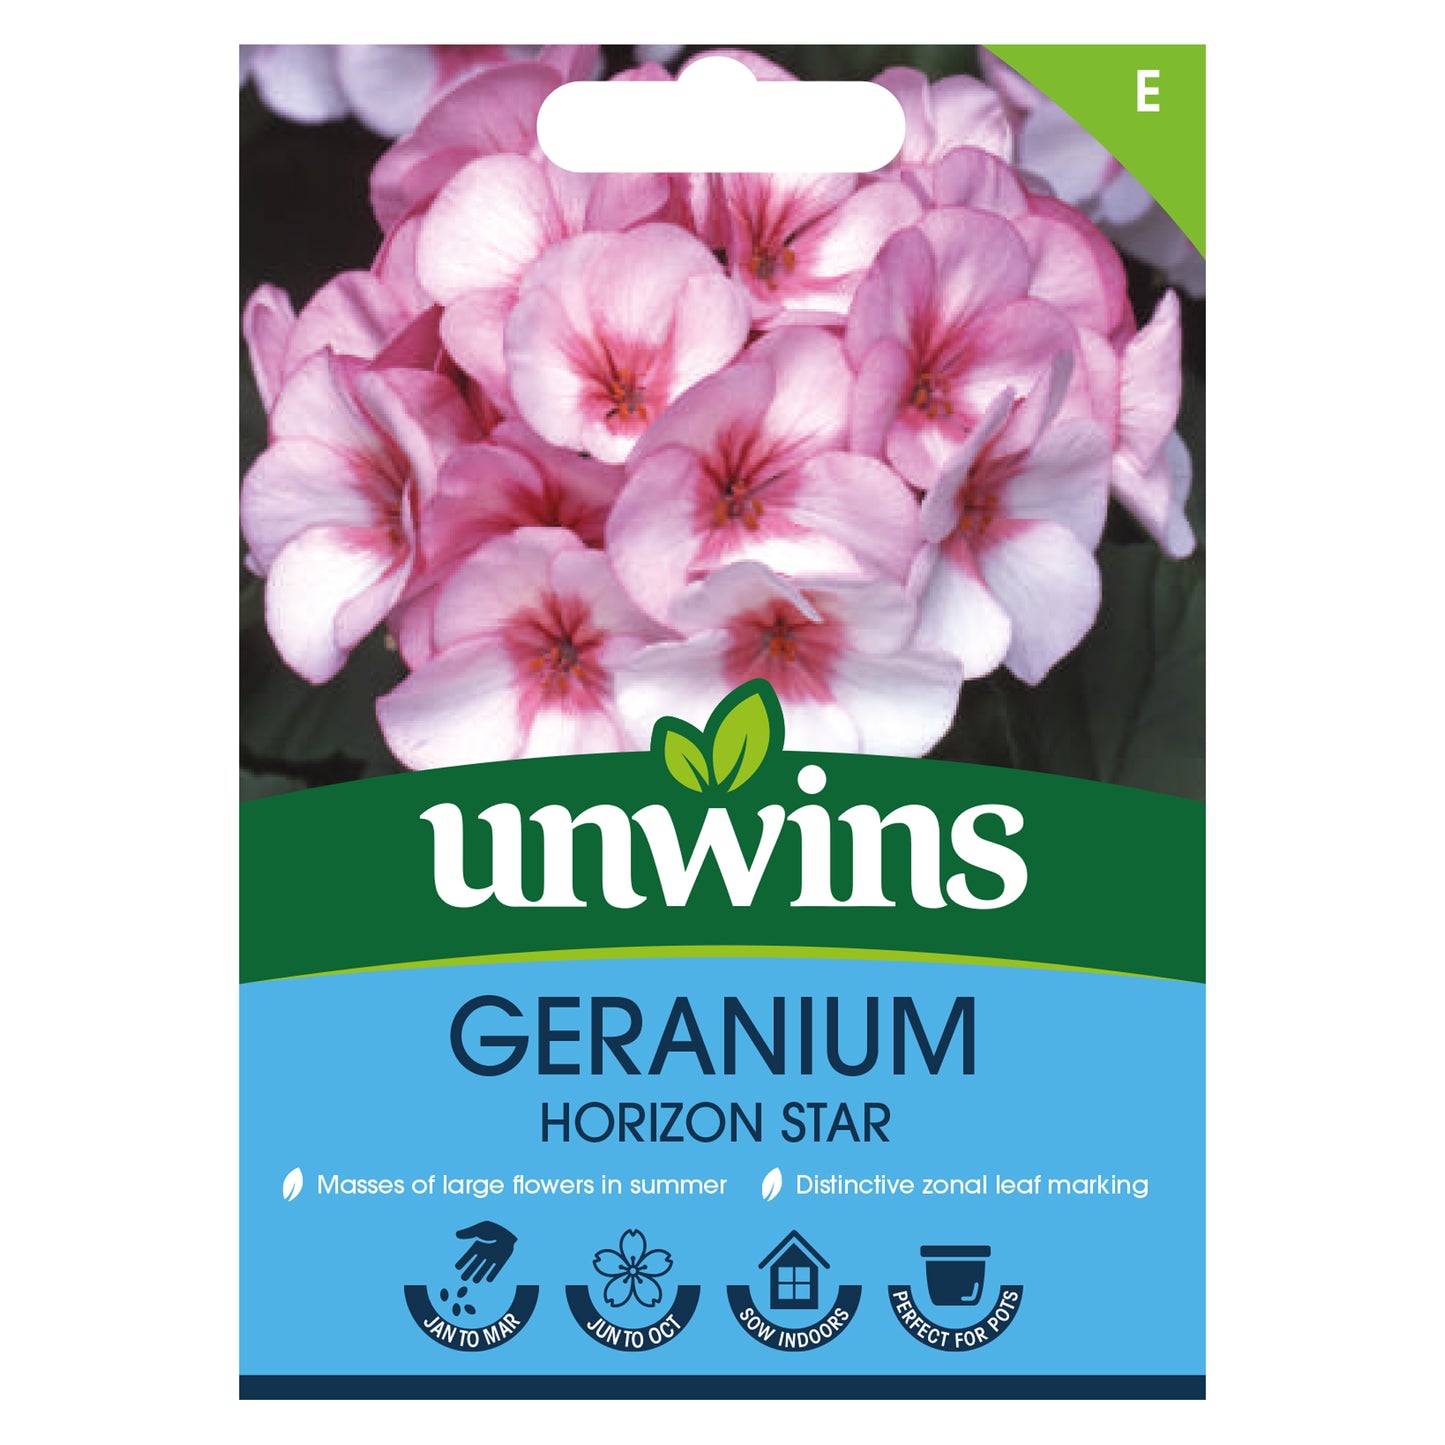 Unwins Geranium Horizon Star Seeds front of pack